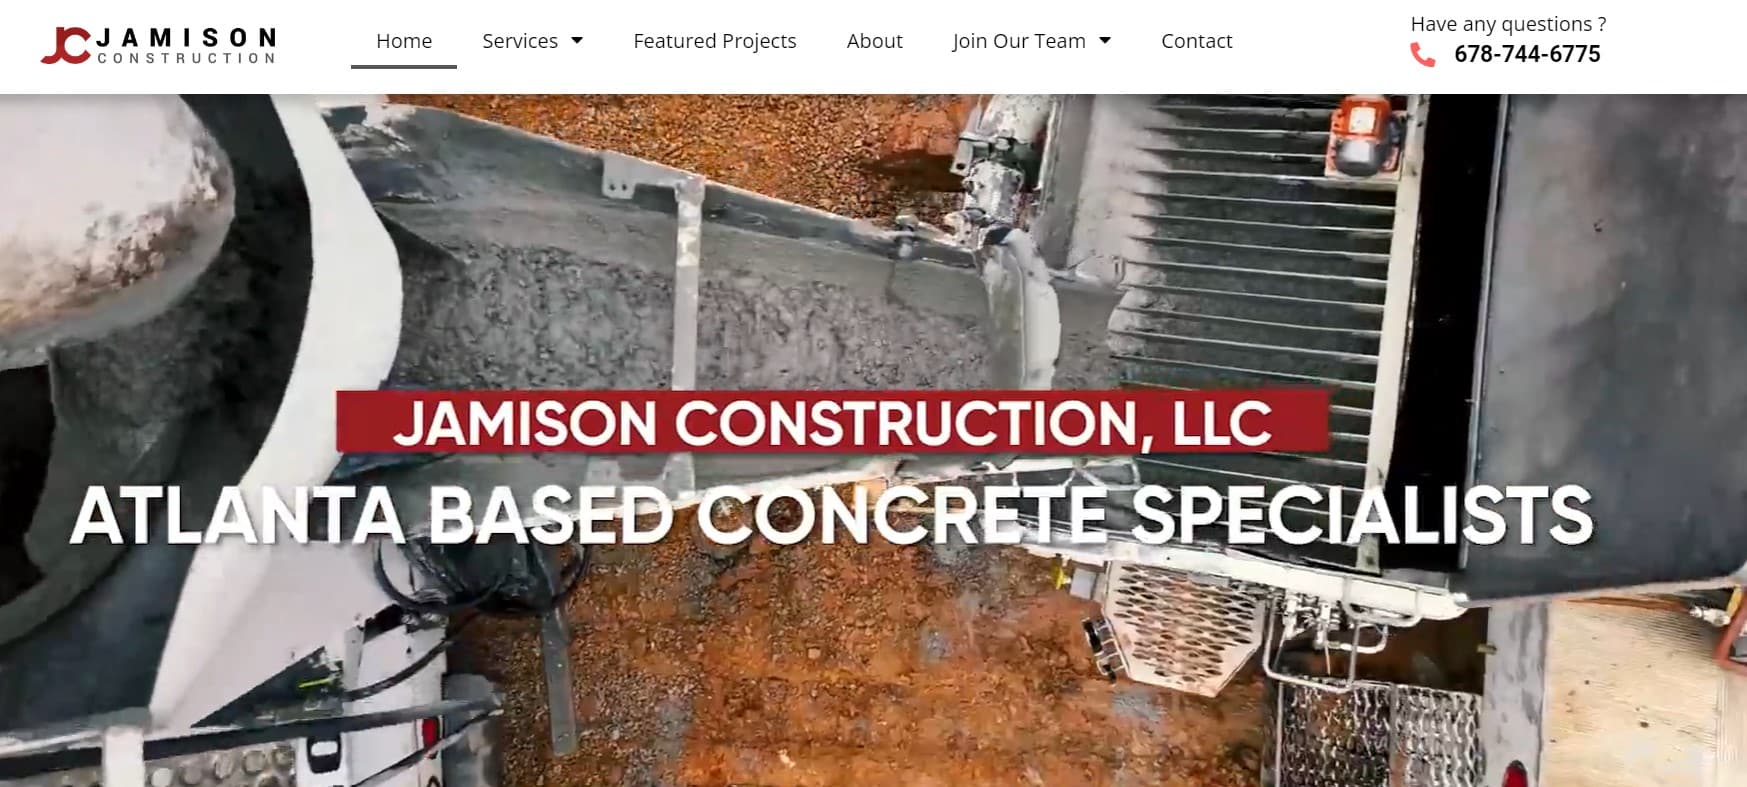 best website design for construction companies